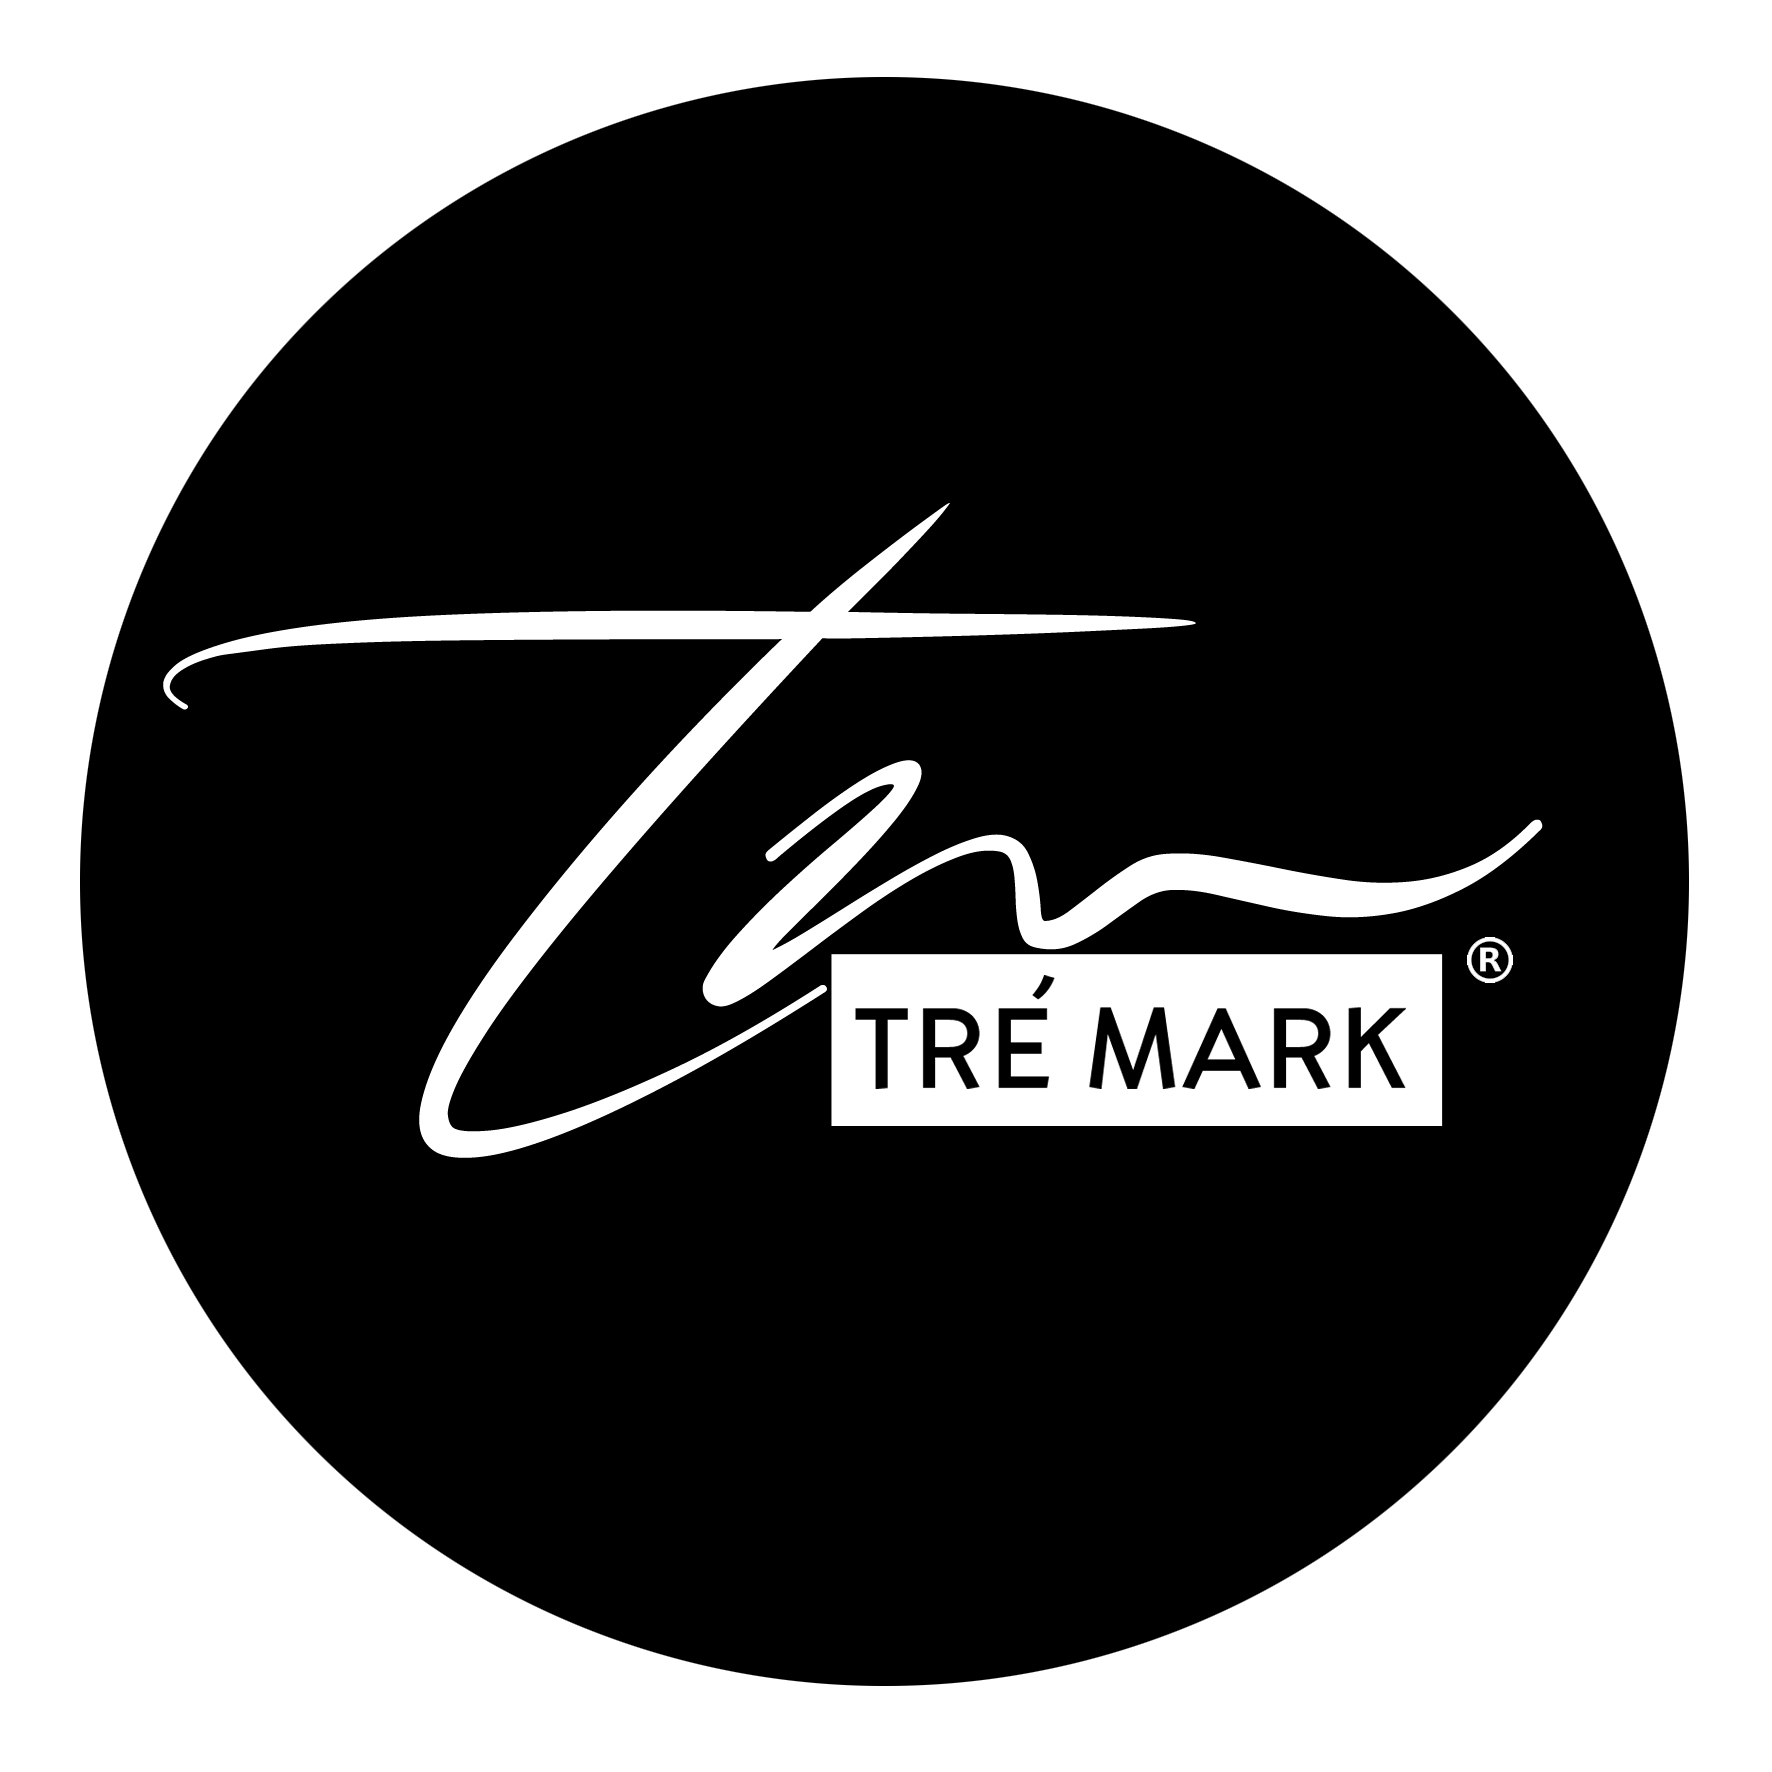 Tremark Studios